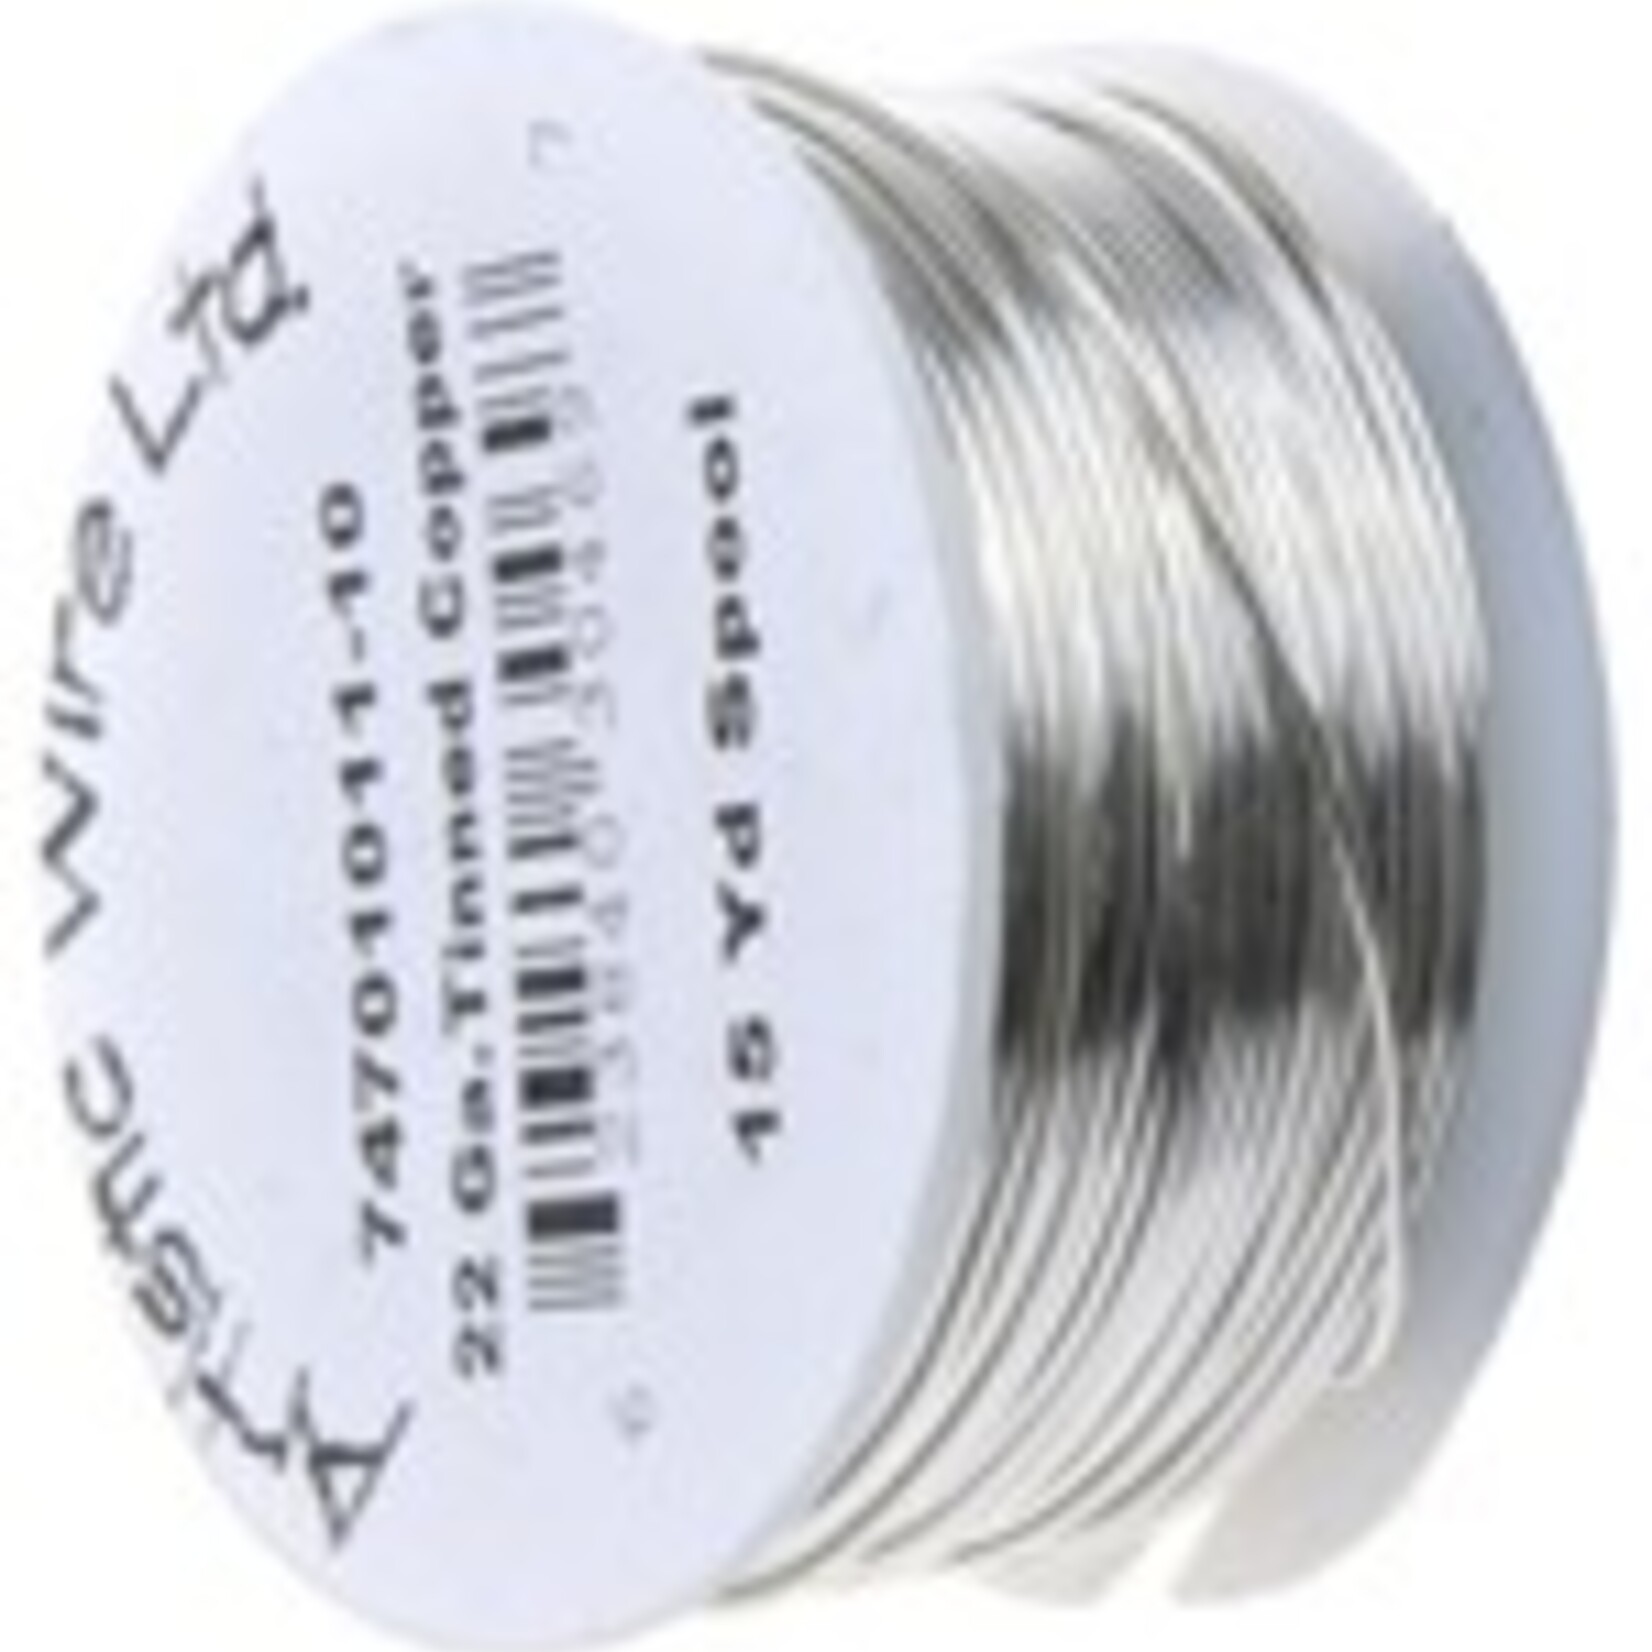 Art Wire Lead/Nickel Safe Stainless Steel 15Yds Silver 22 Ga